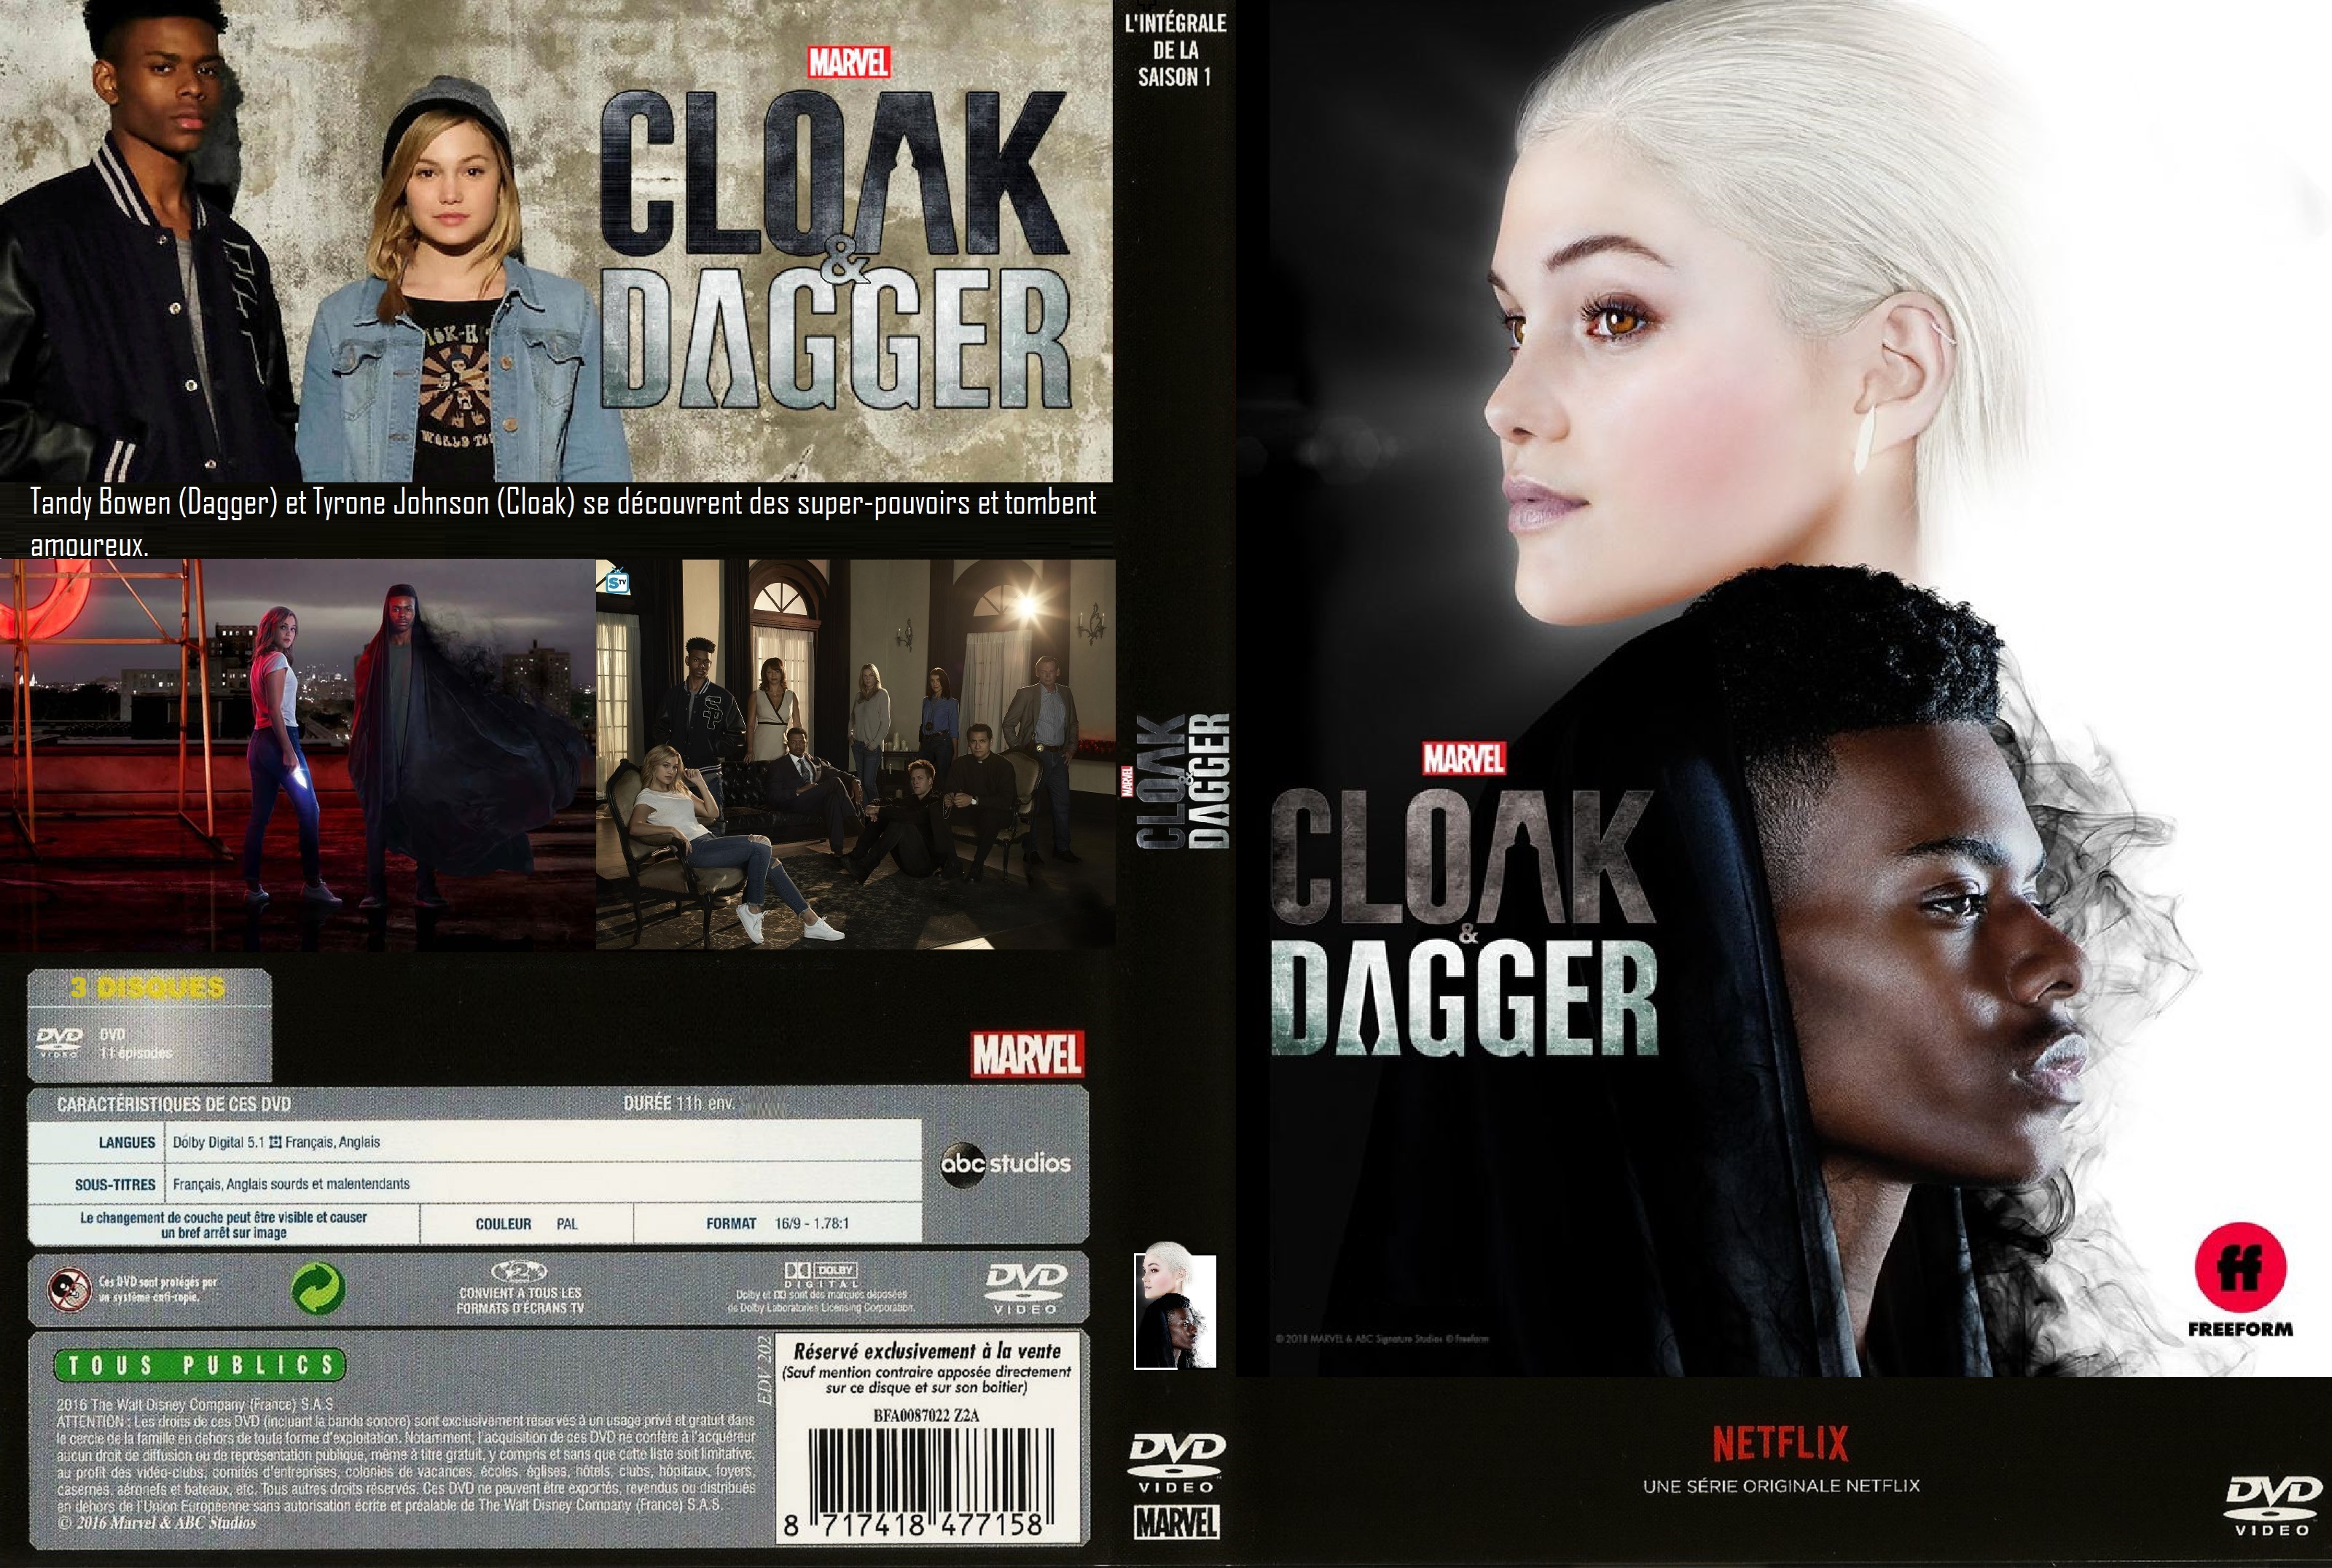 Jaquette DVD Cloak & Dagger saison 1 custom